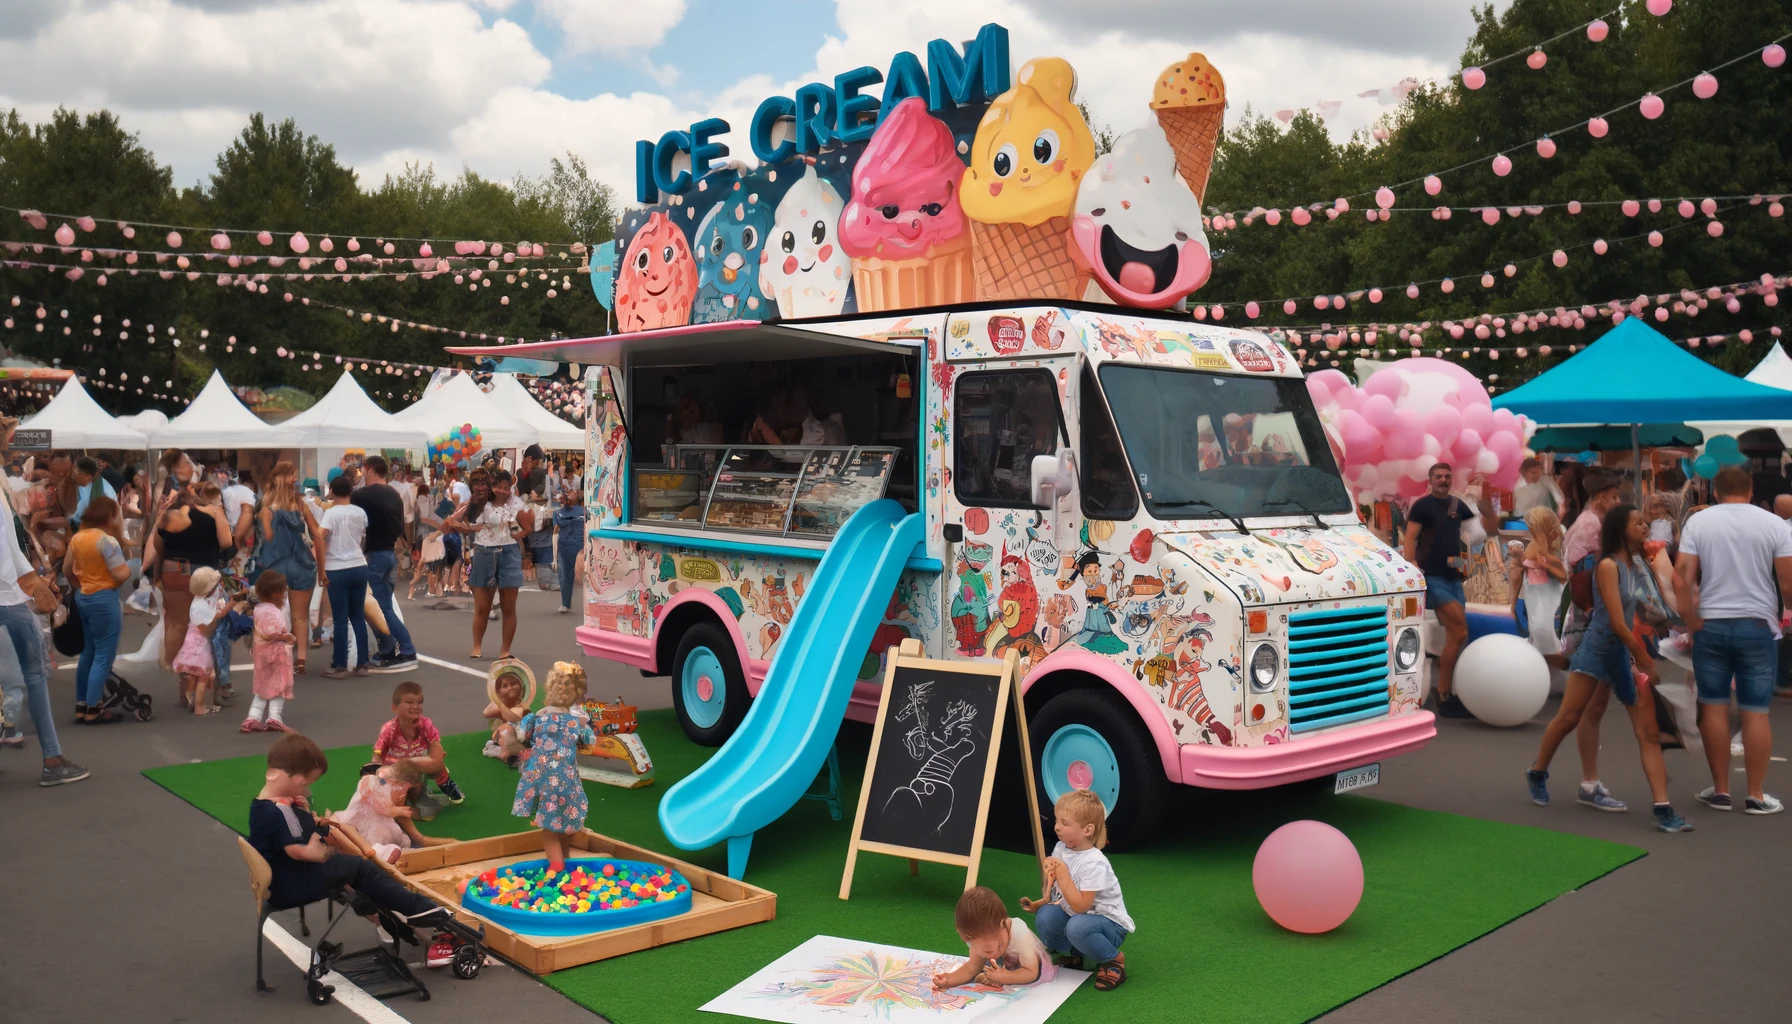 ice cream truck business name ideas